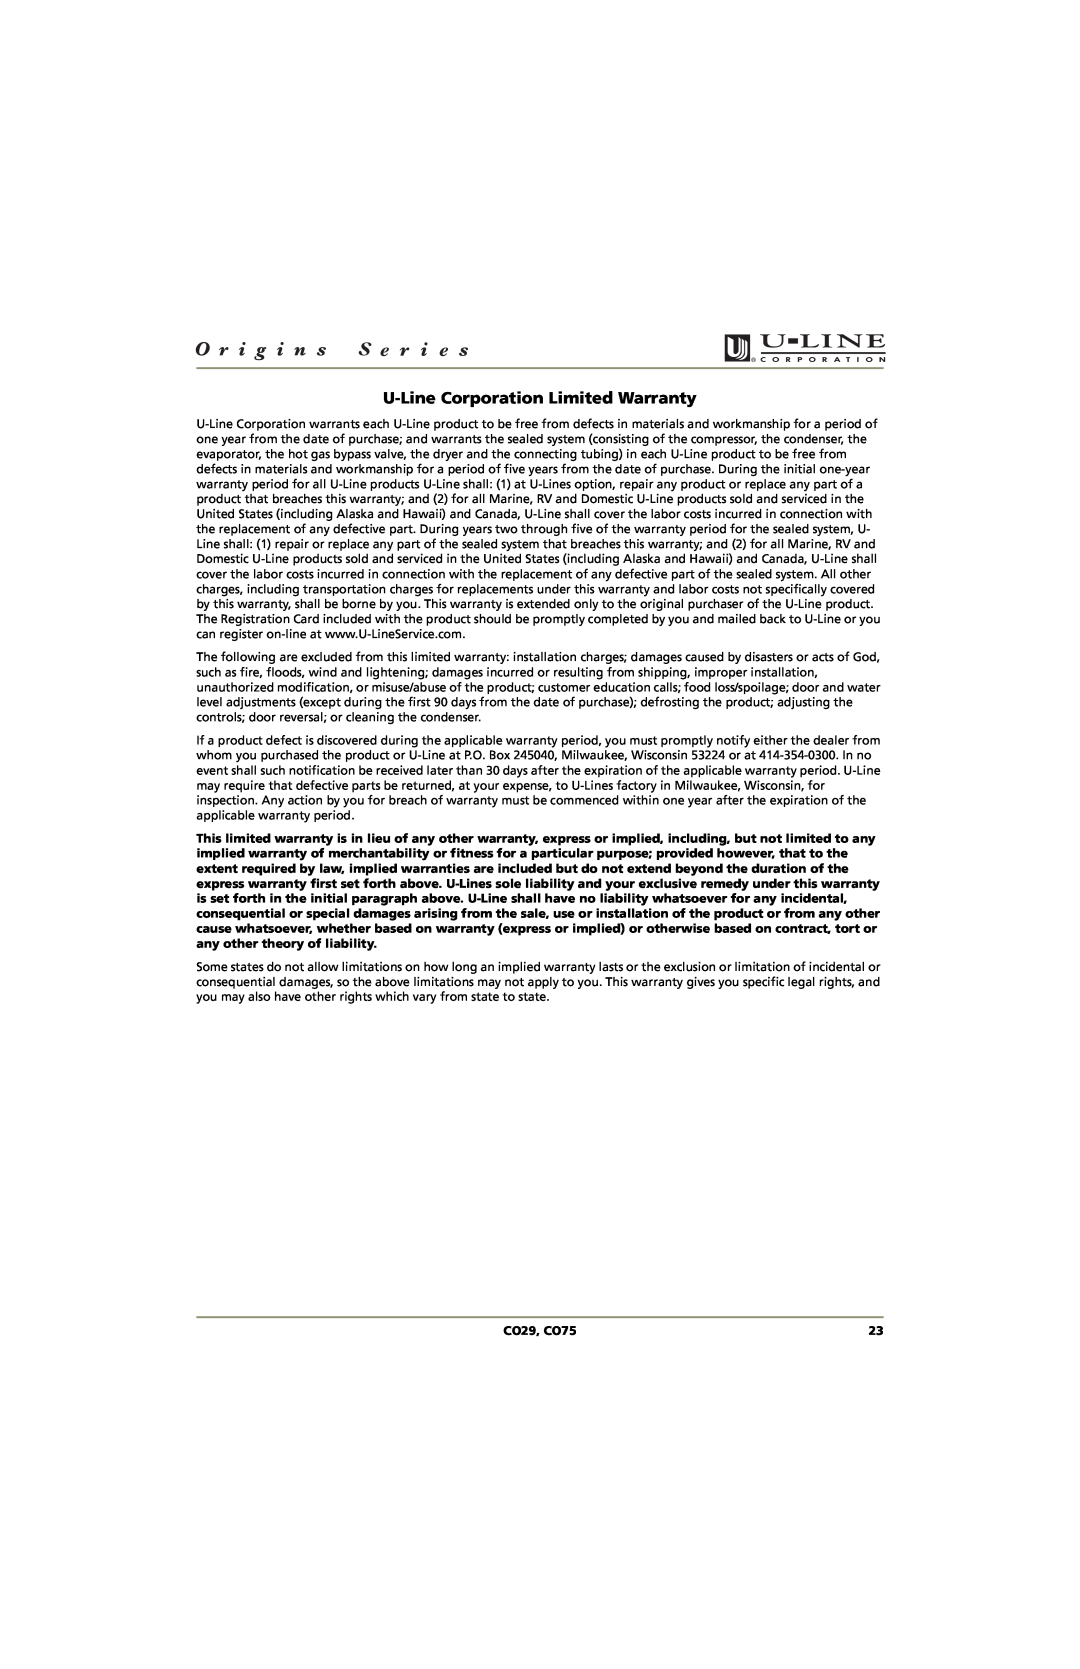 U-Line manual U-LineCorporation Limited Warranty, CO29, CO75 